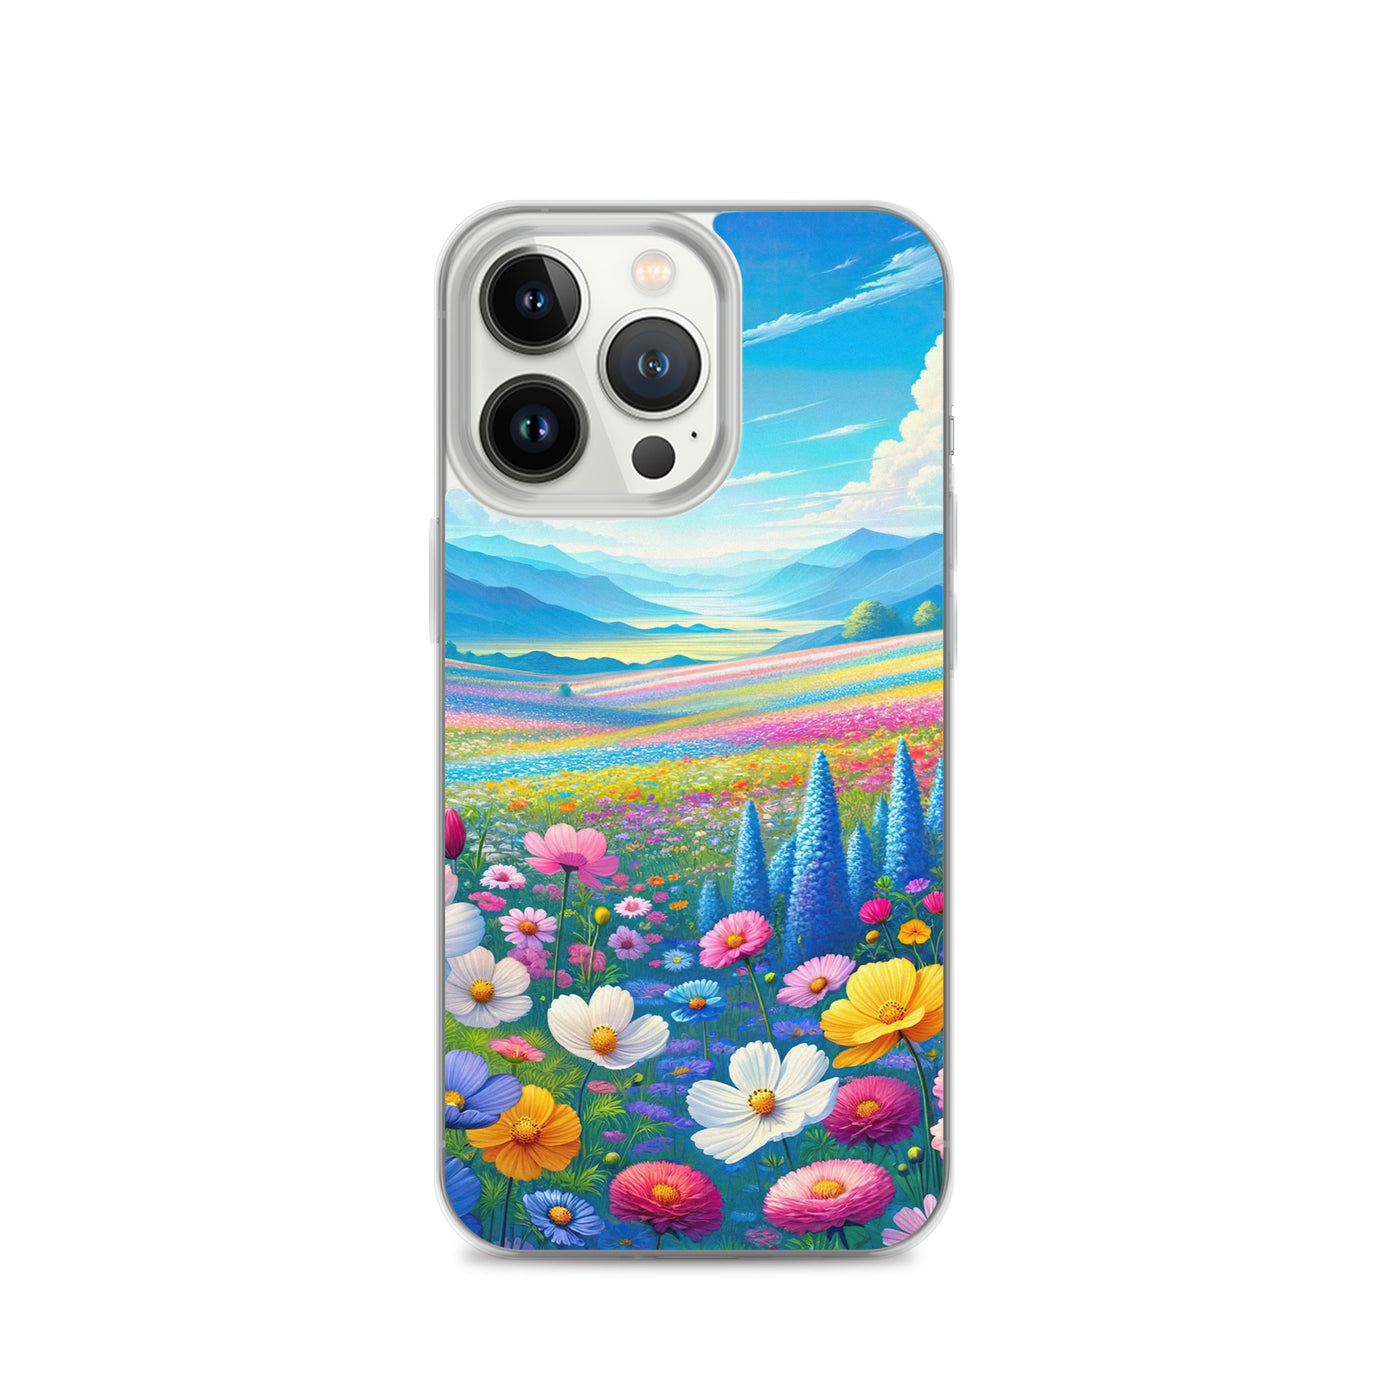 Weitläufiges Blumenfeld unter himmelblauem Himmel, leuchtende Flora - iPhone Schutzhülle (durchsichtig) camping xxx yyy zzz iPhone 13 Pro